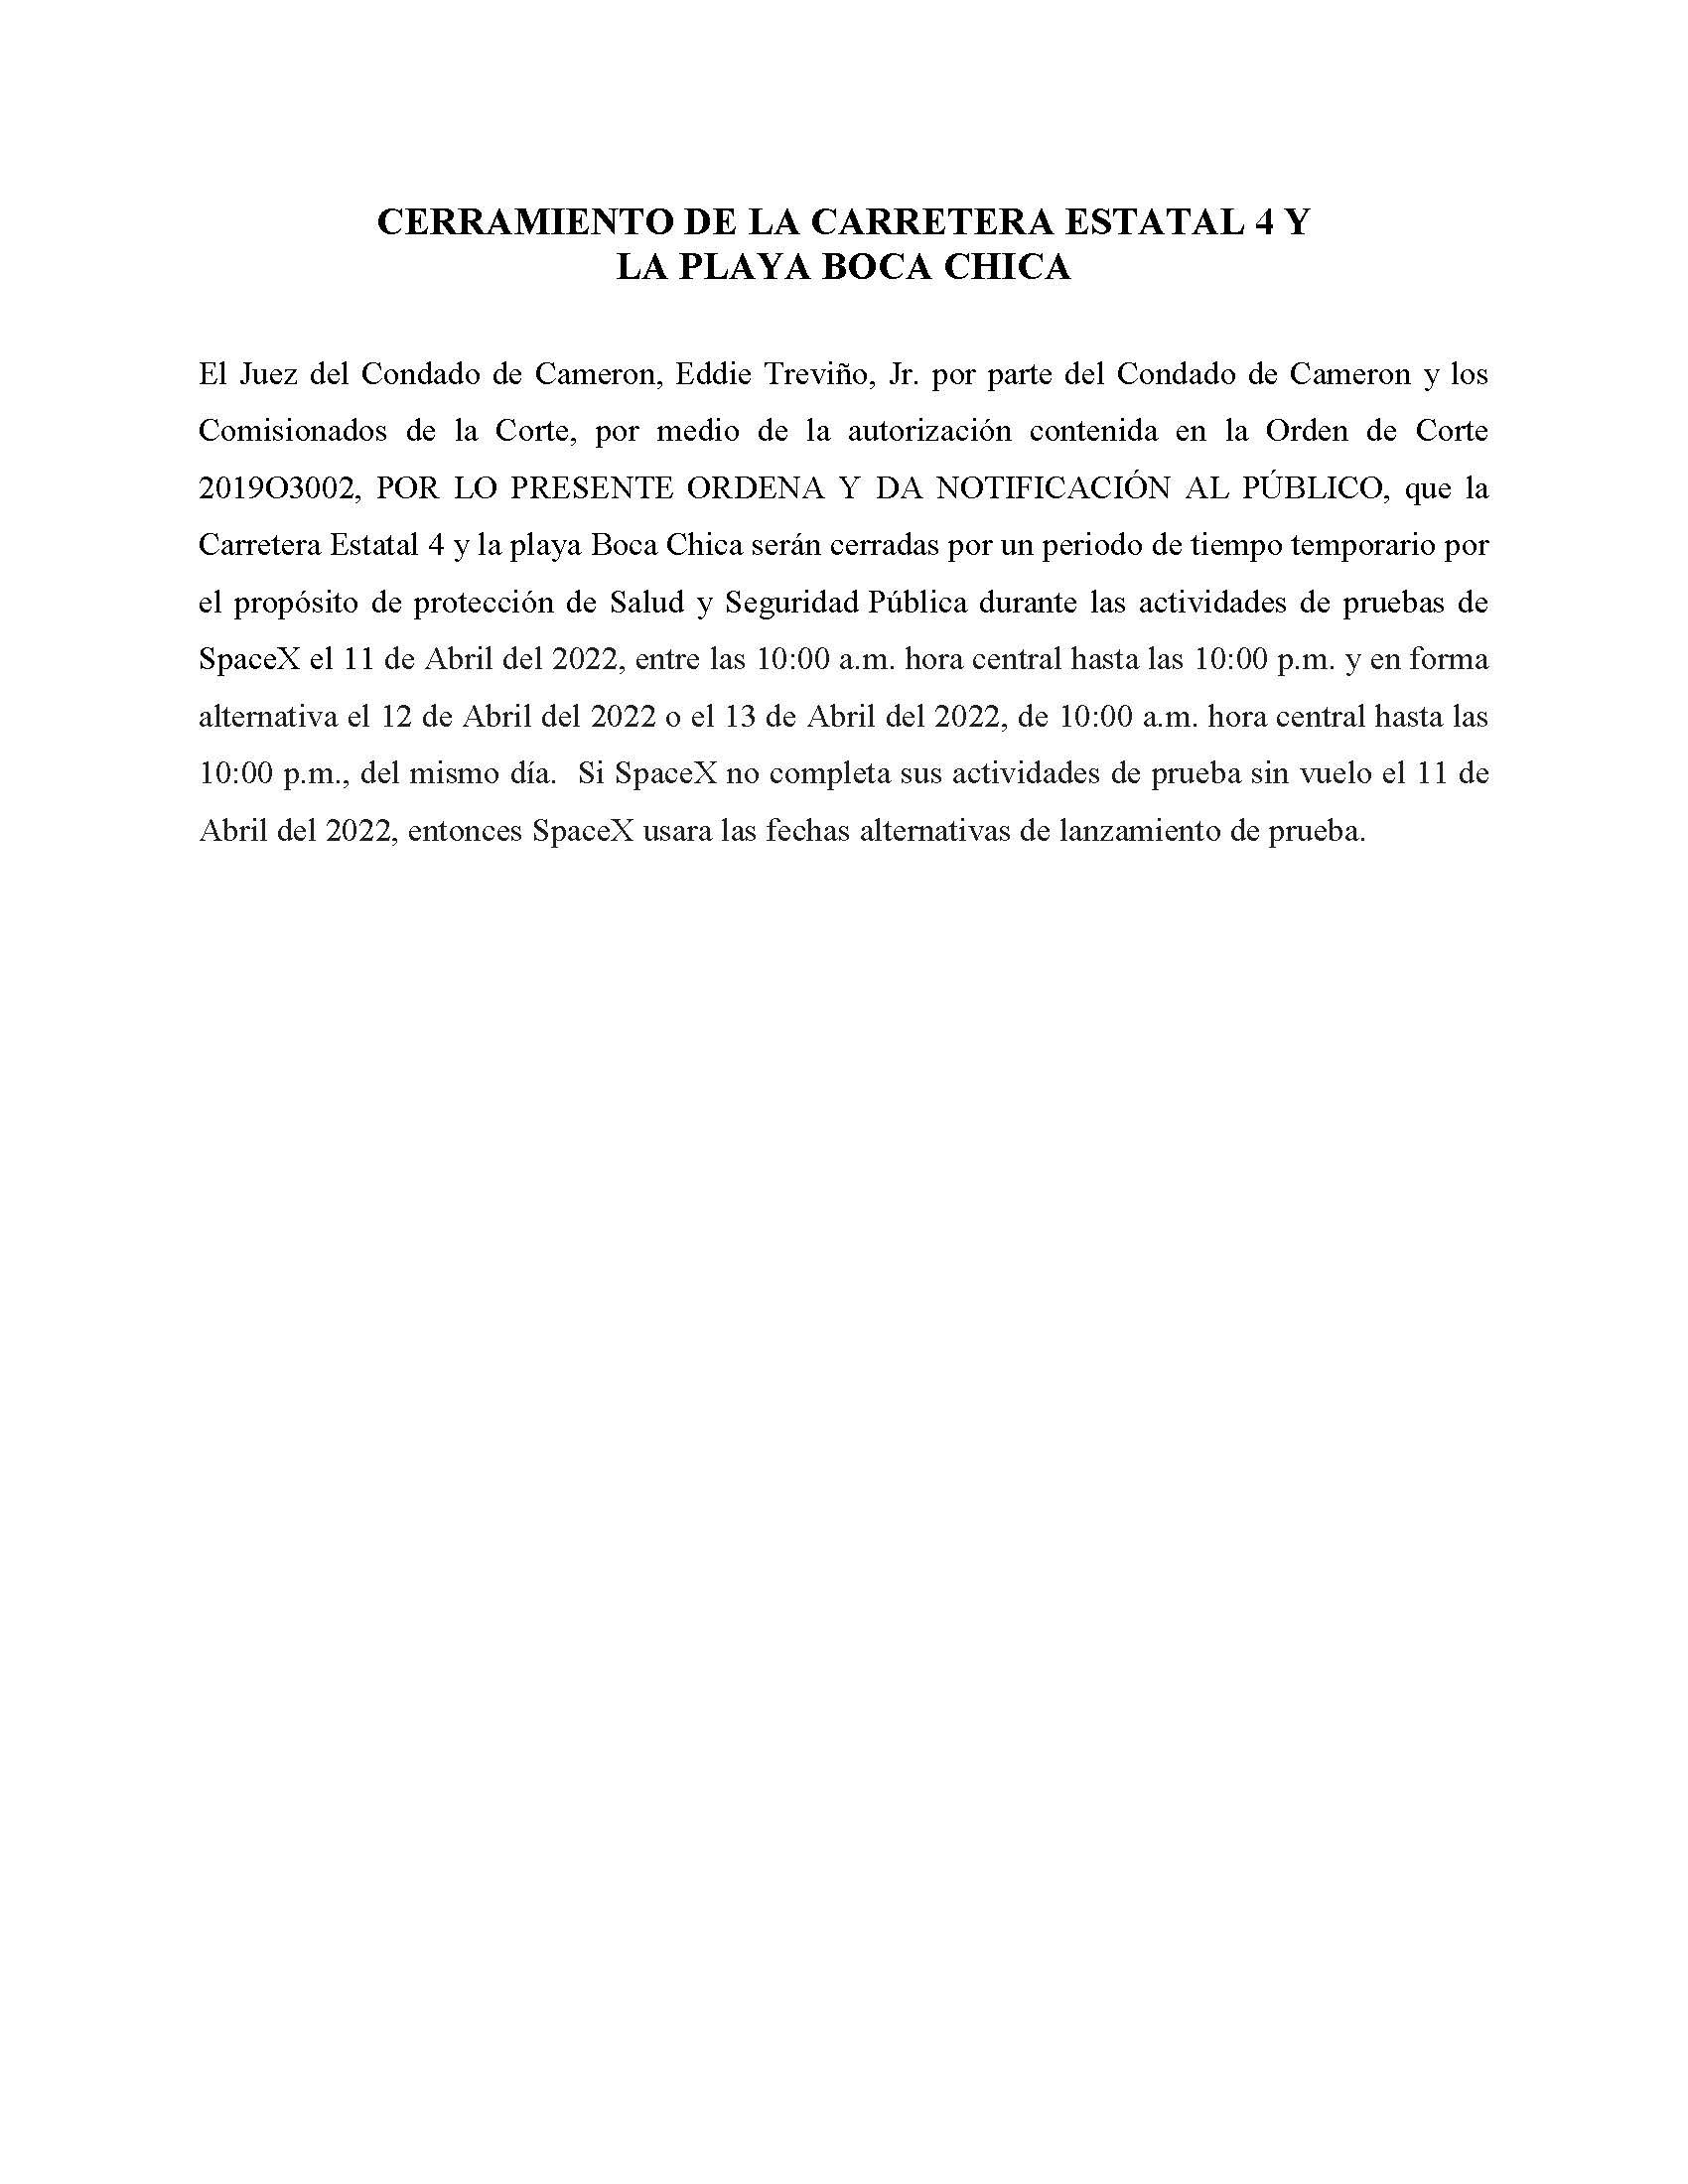 ORDER.CLOSURE OF HIGHWAY 4 Y LA PLAYA BOCA CHICA.SPANISH.04.11.2022